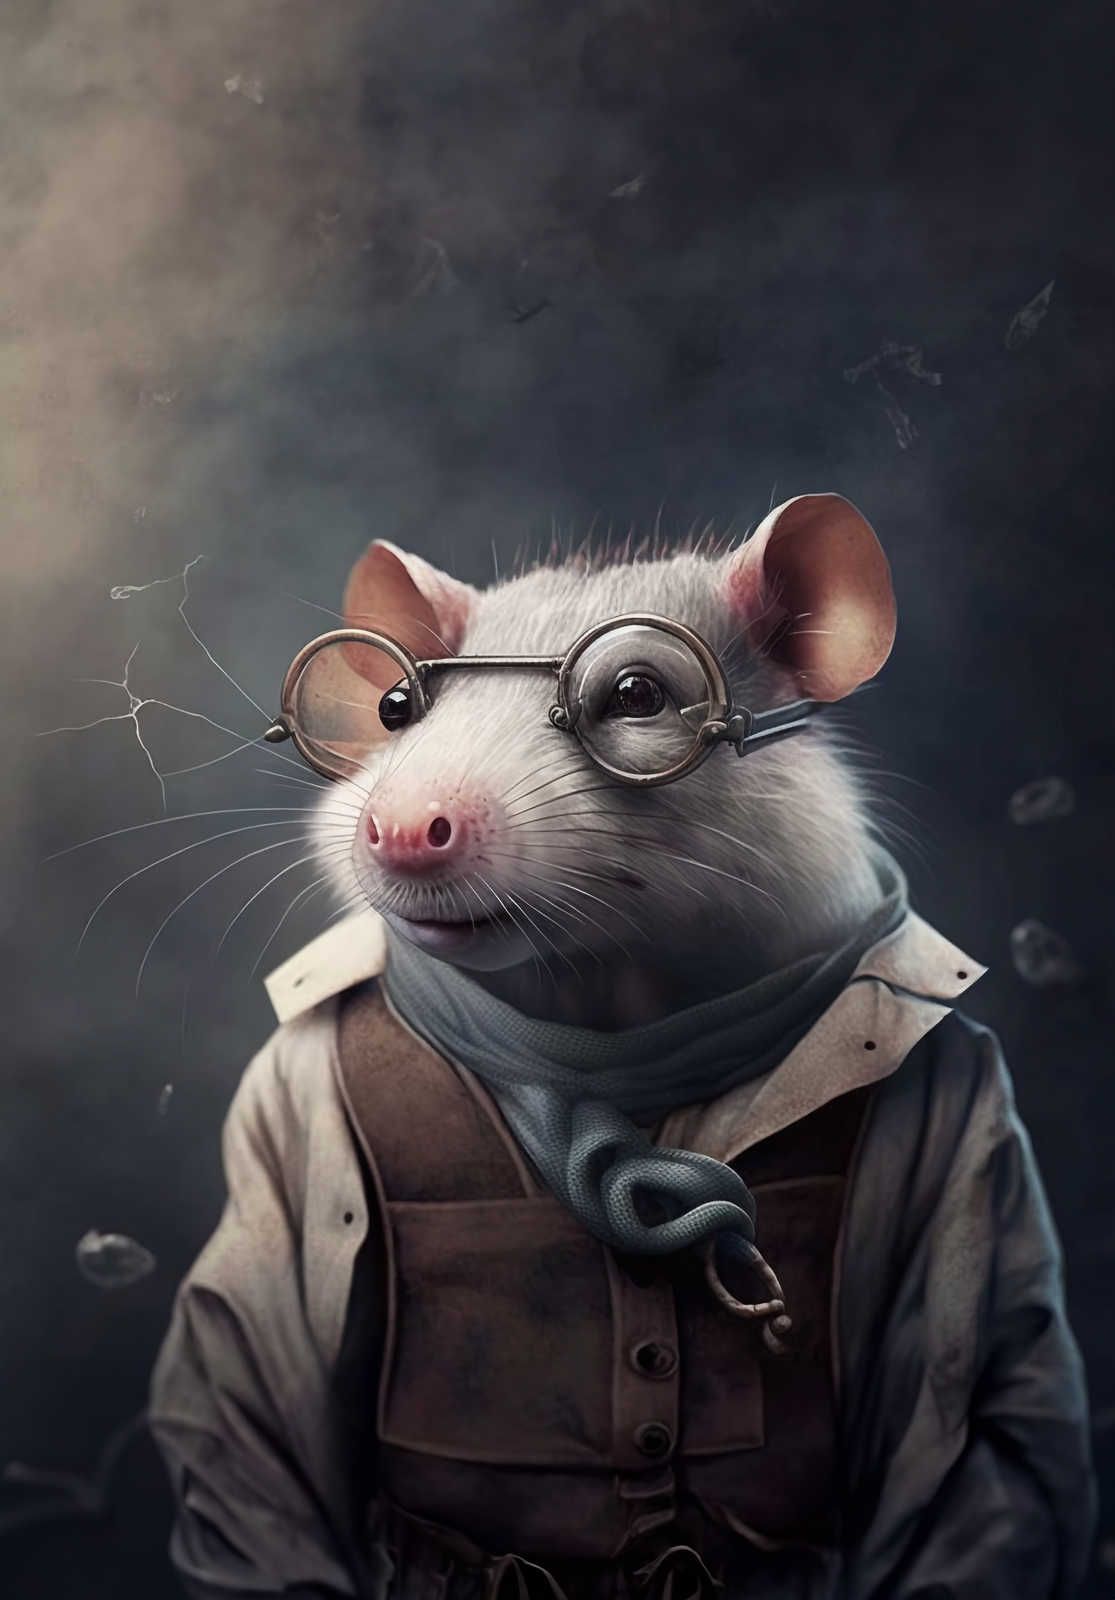             KI-Leinwandbild »scientific rat« – 60 cm x 90 cm
        